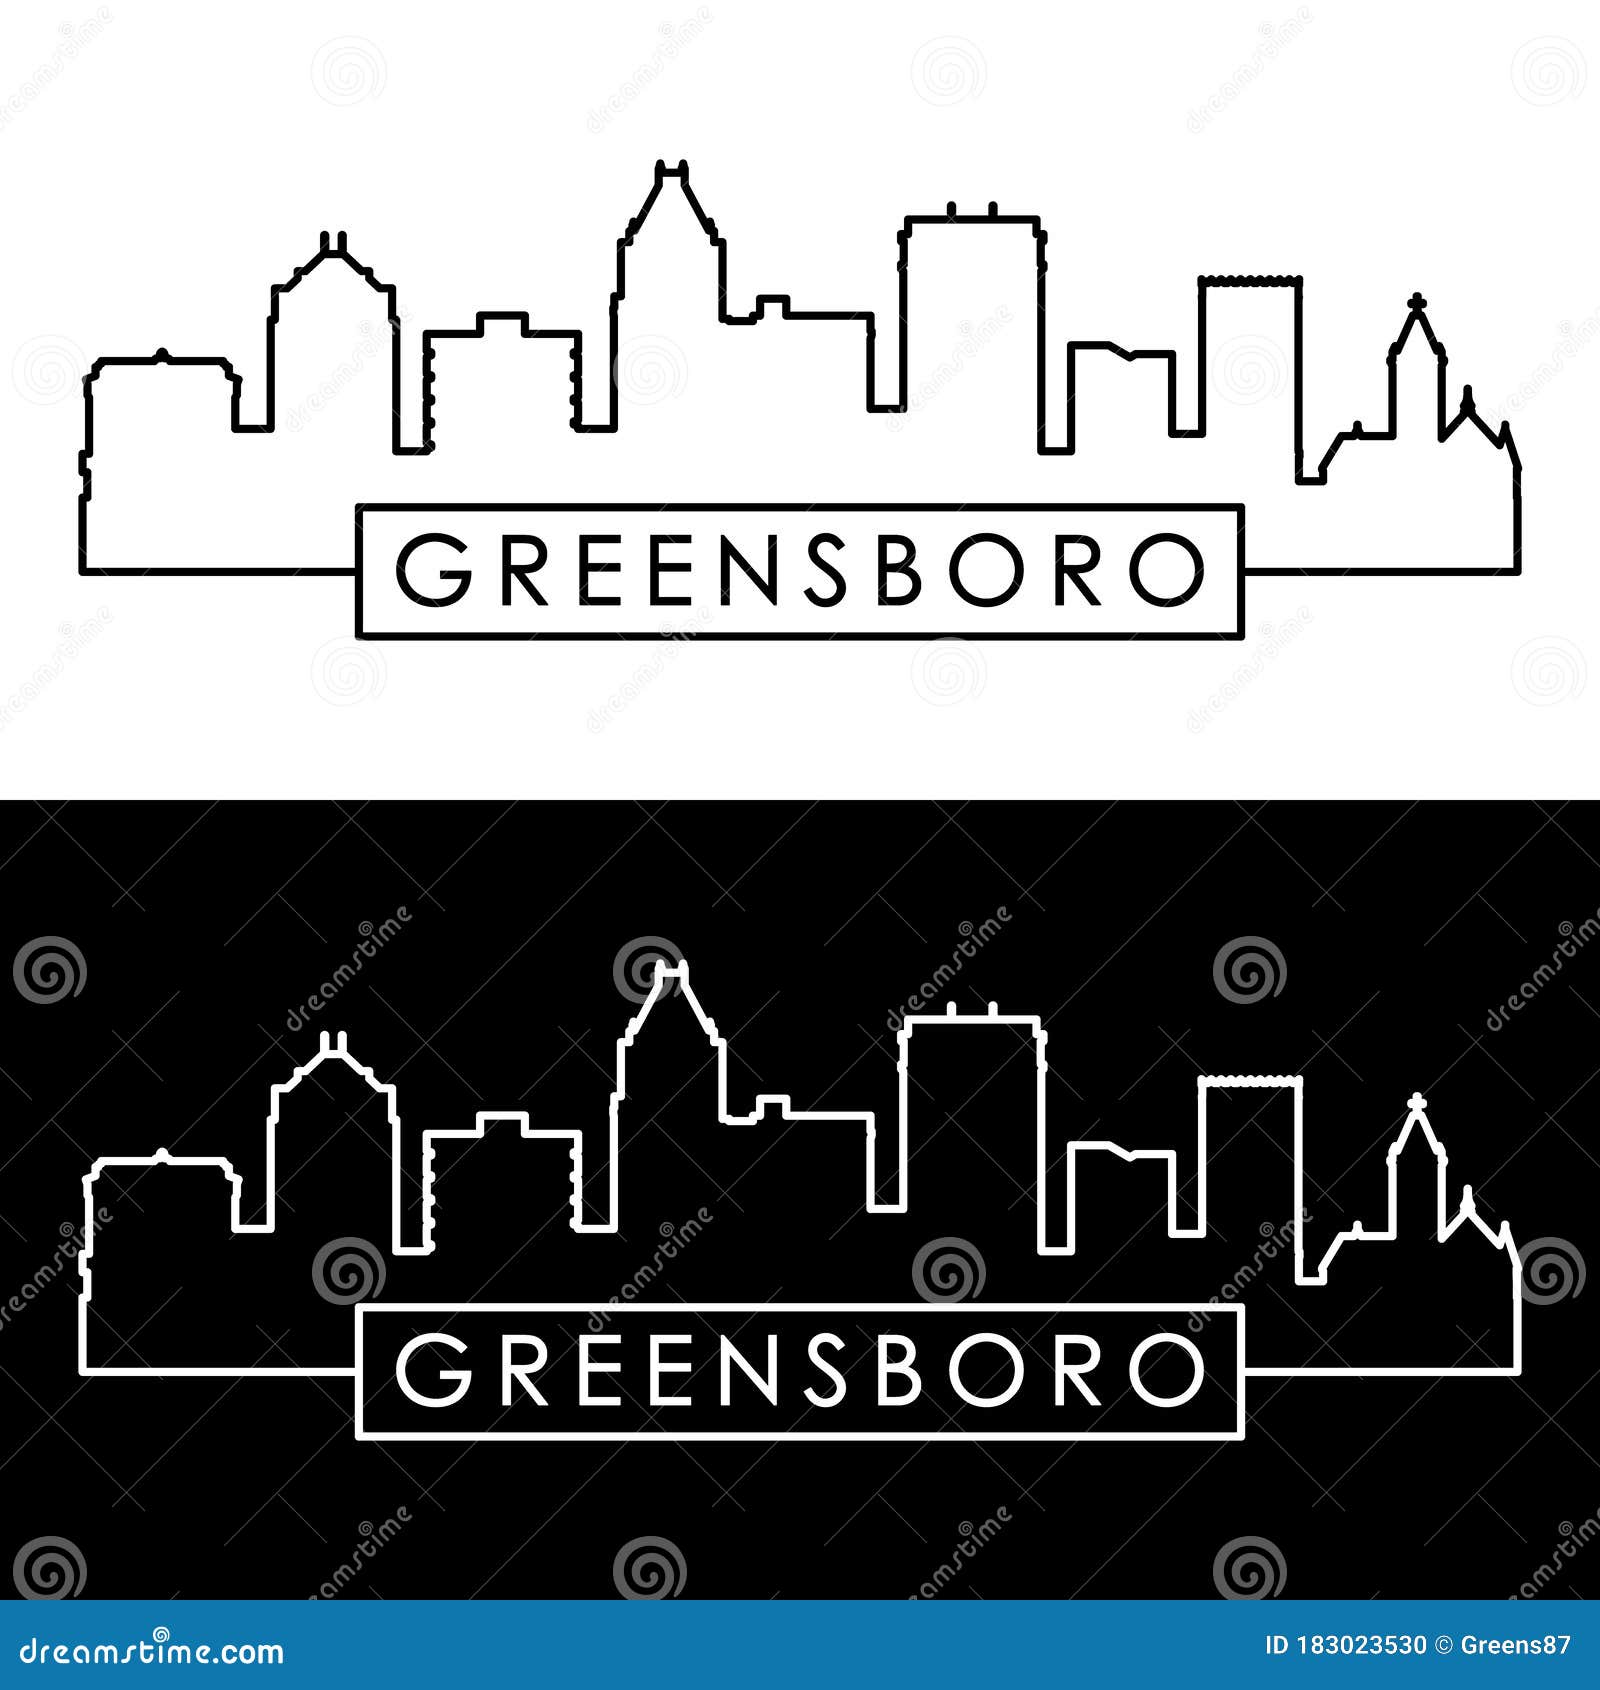 greensboro skyline. linear style. logo .